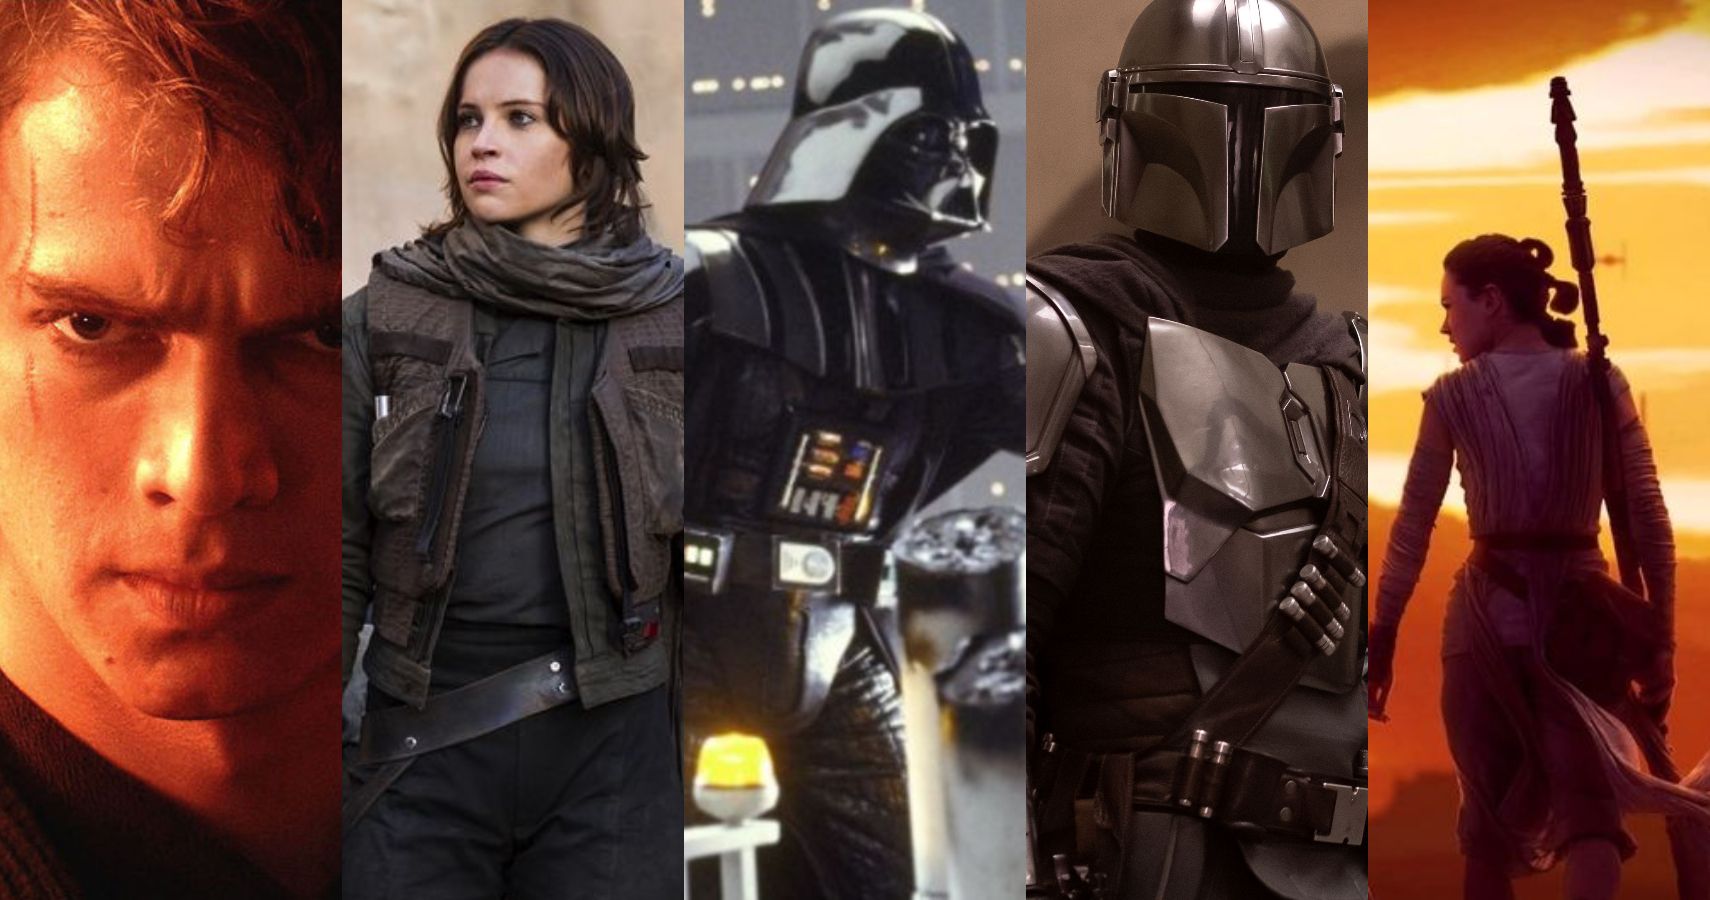 All 9 Main Star Wars Films, Ranked According To IMDb